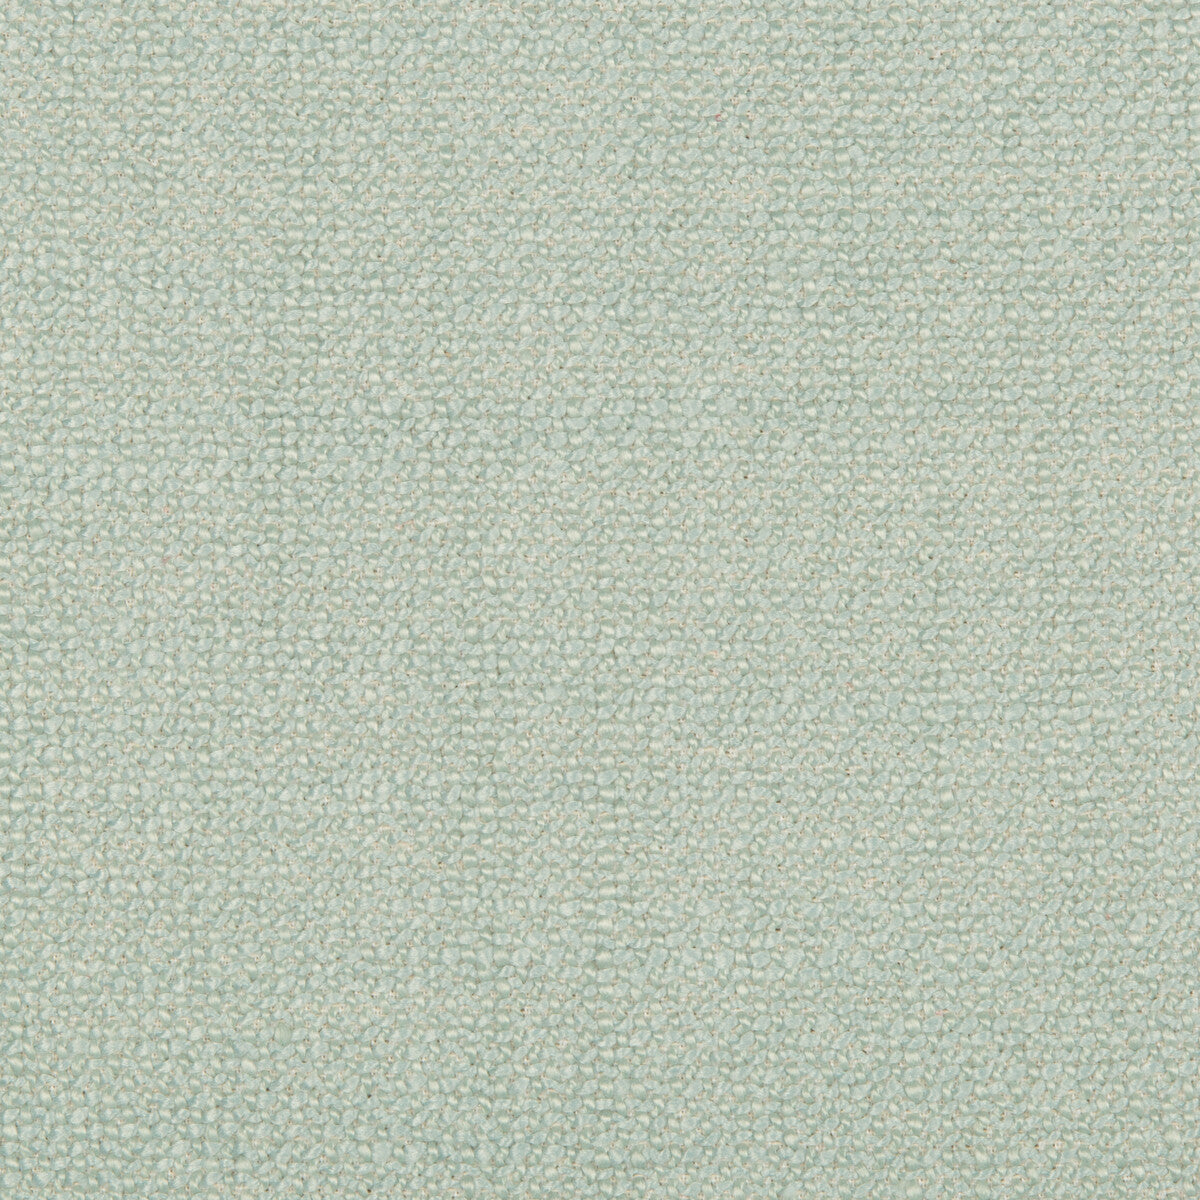 Kravet Smart fabric in 35379-1135 color - pattern 35379.1135.0 - by Kravet Smart in the Performance Kravetarmor collection